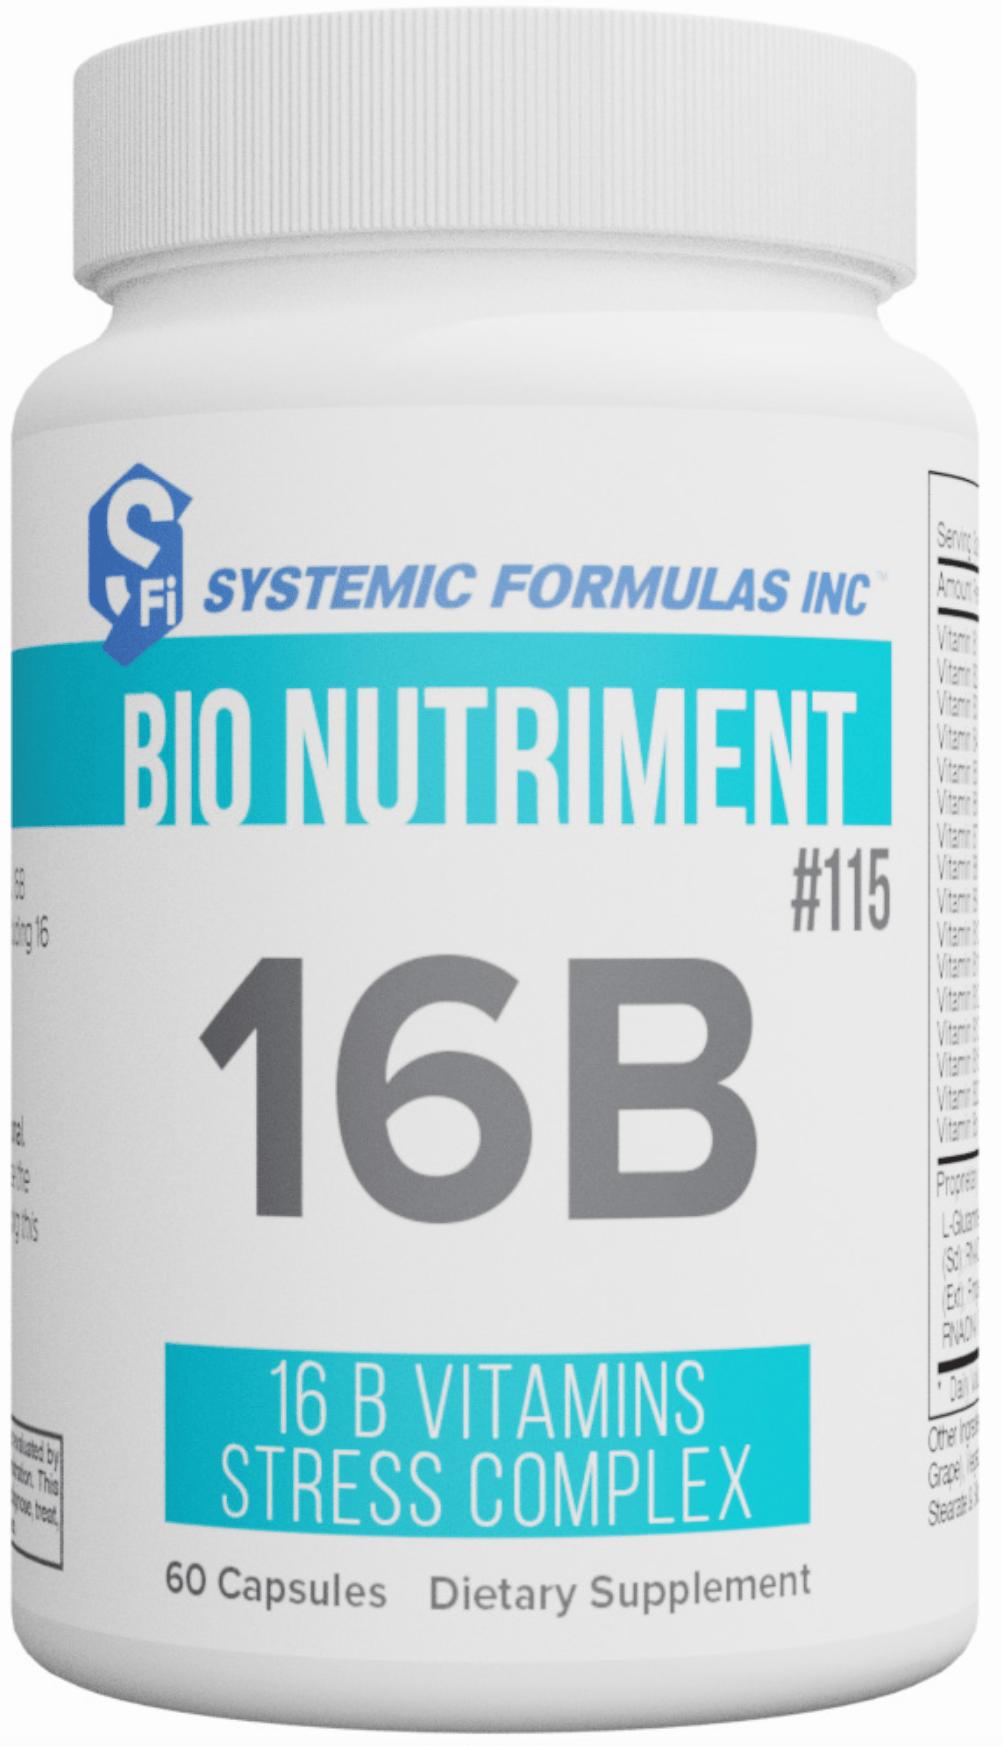 A white bottle of Bio-Nutriment 16B stress complex capsules.